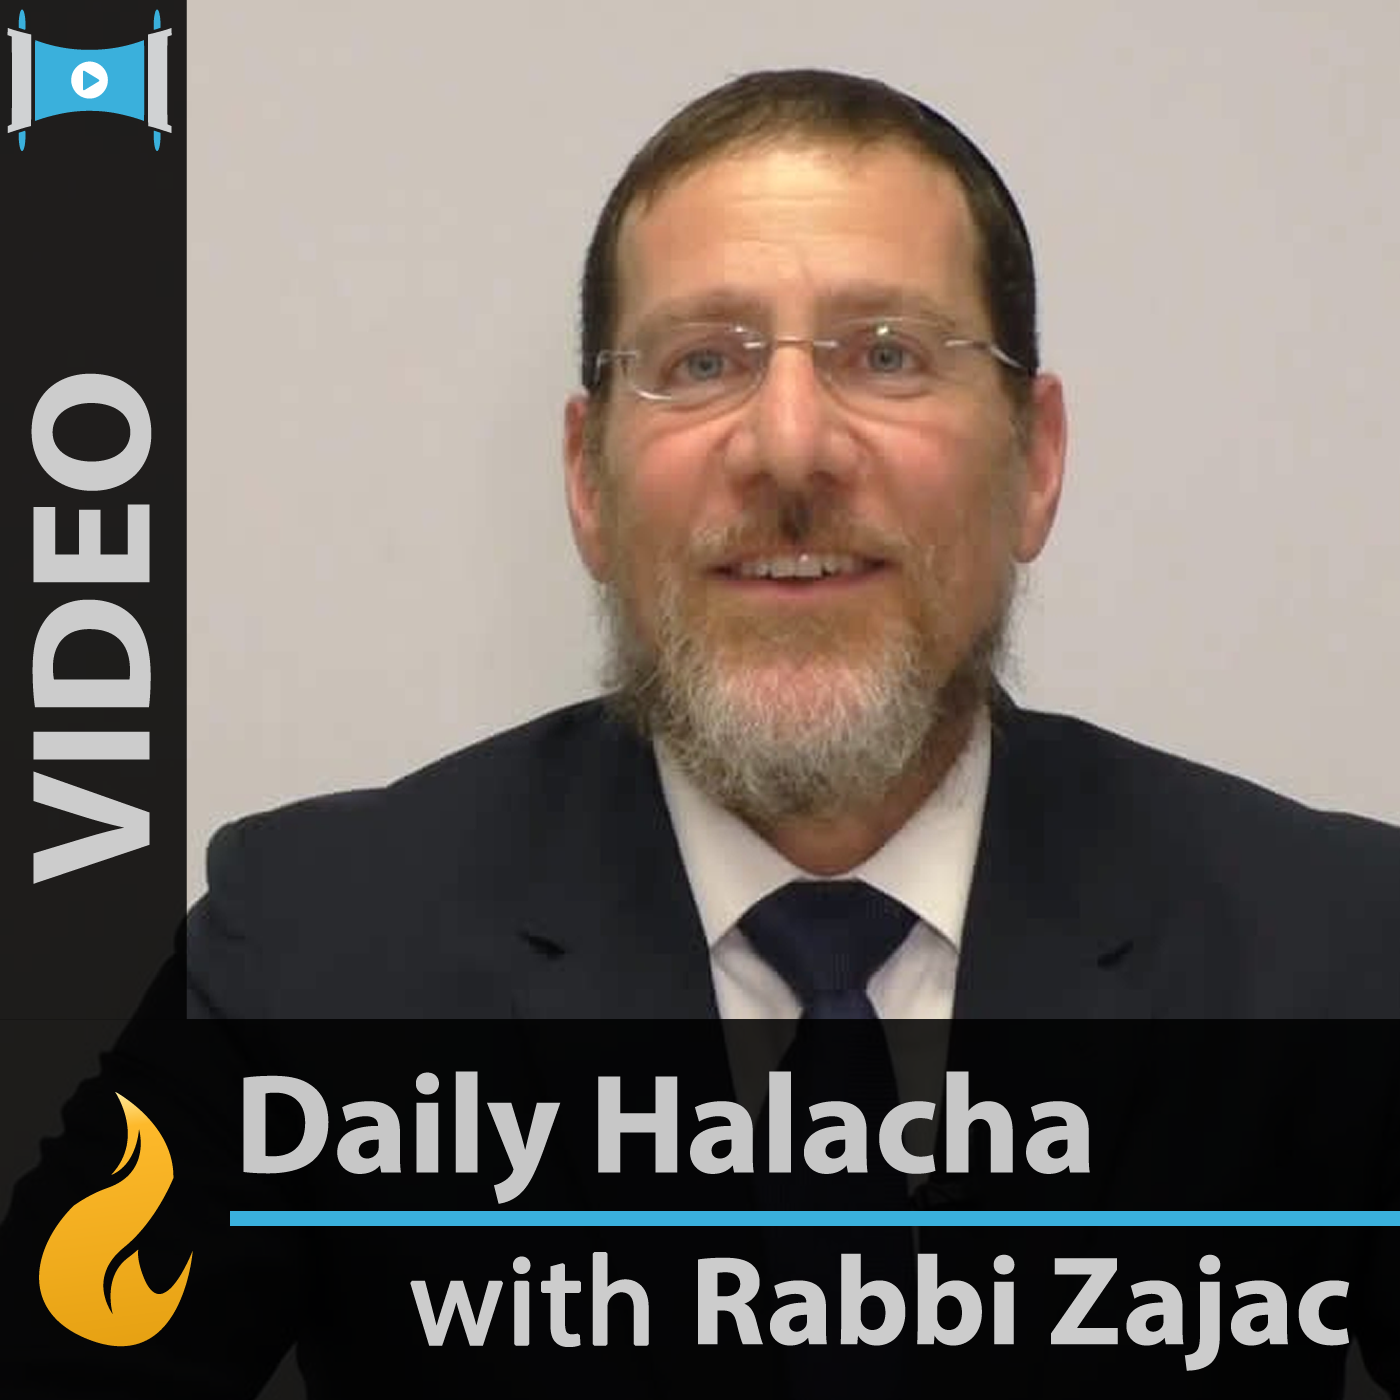 Daily Halachah (Video)